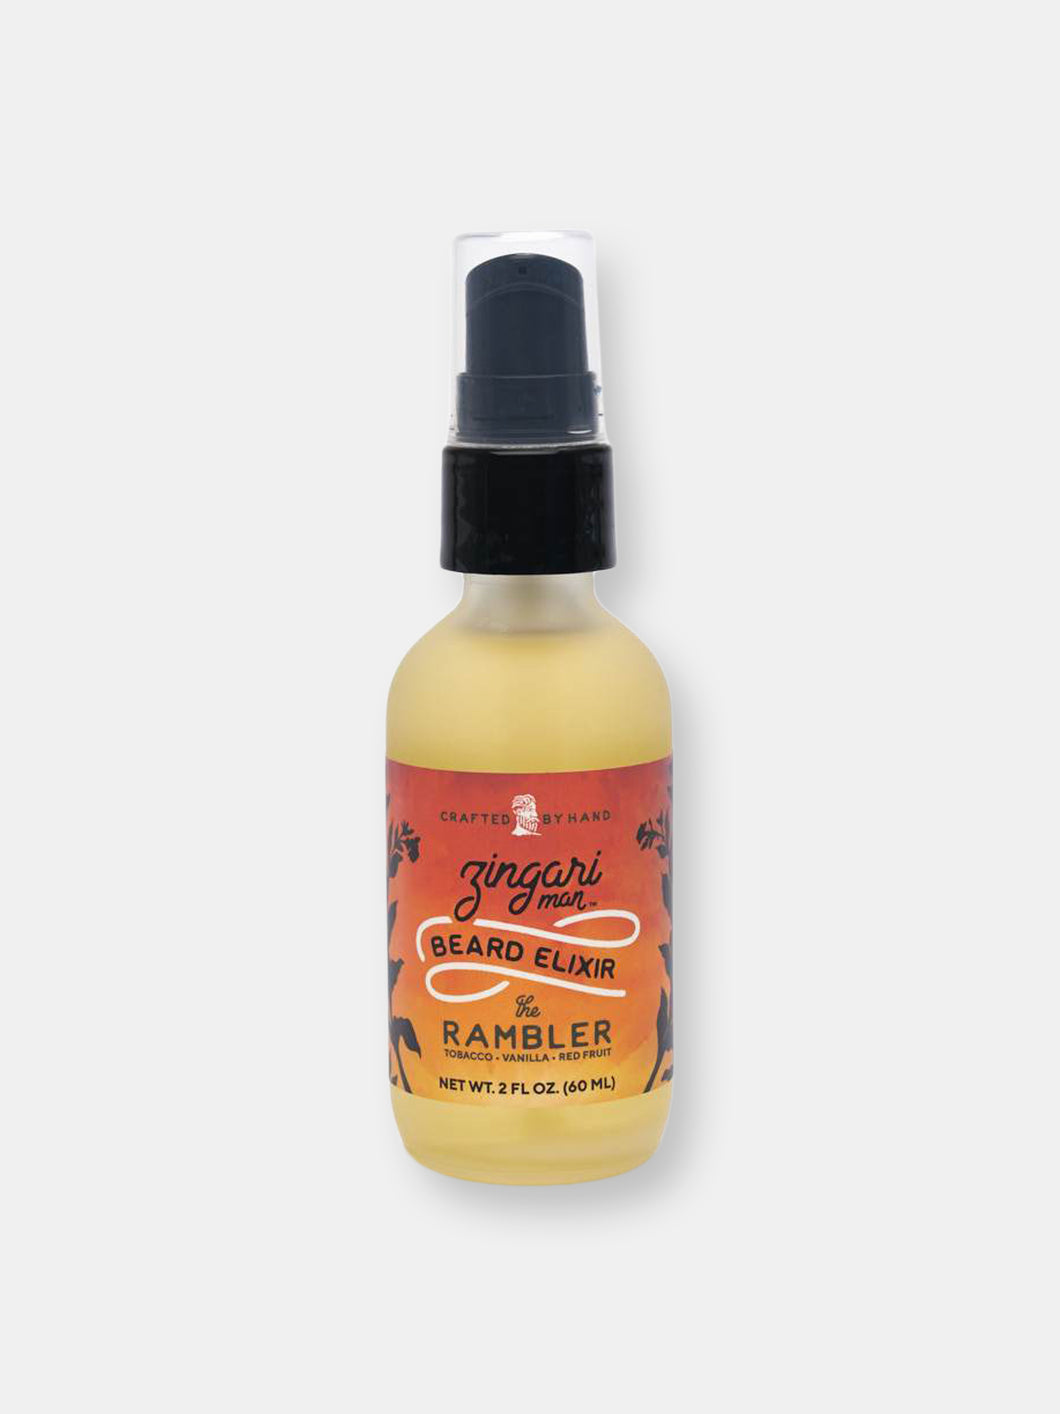 The Rambler Beard elixir